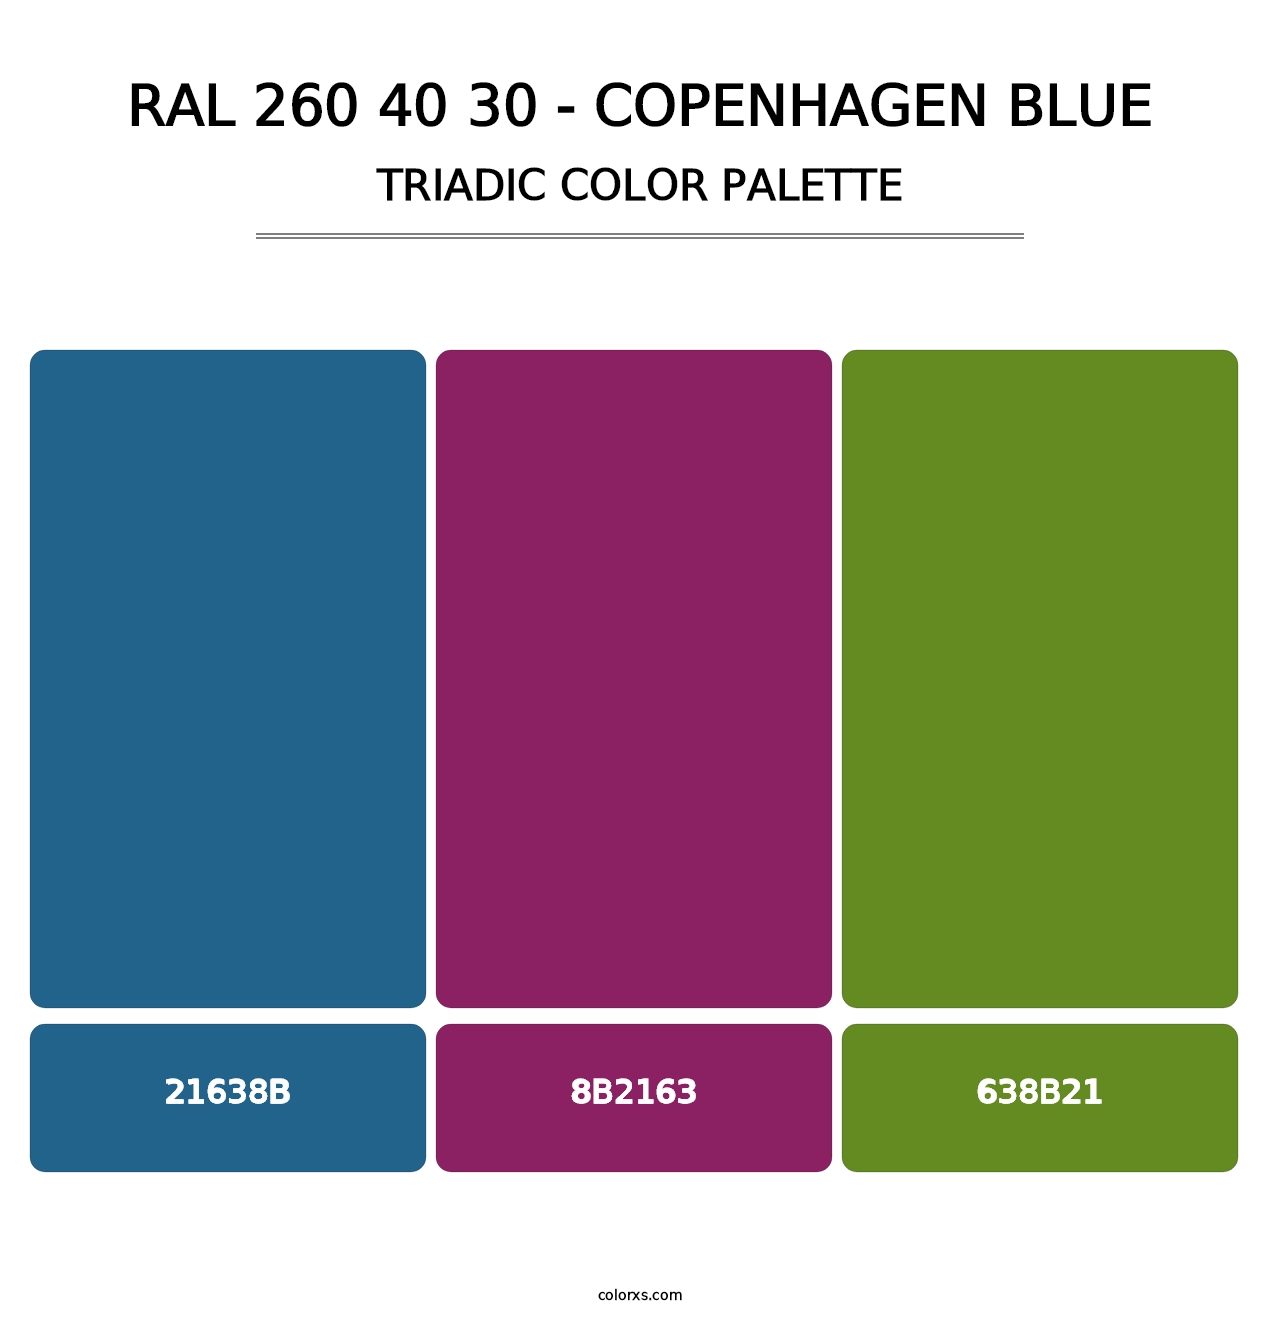 RAL 260 40 30 - Copenhagen Blue - Triadic Color Palette